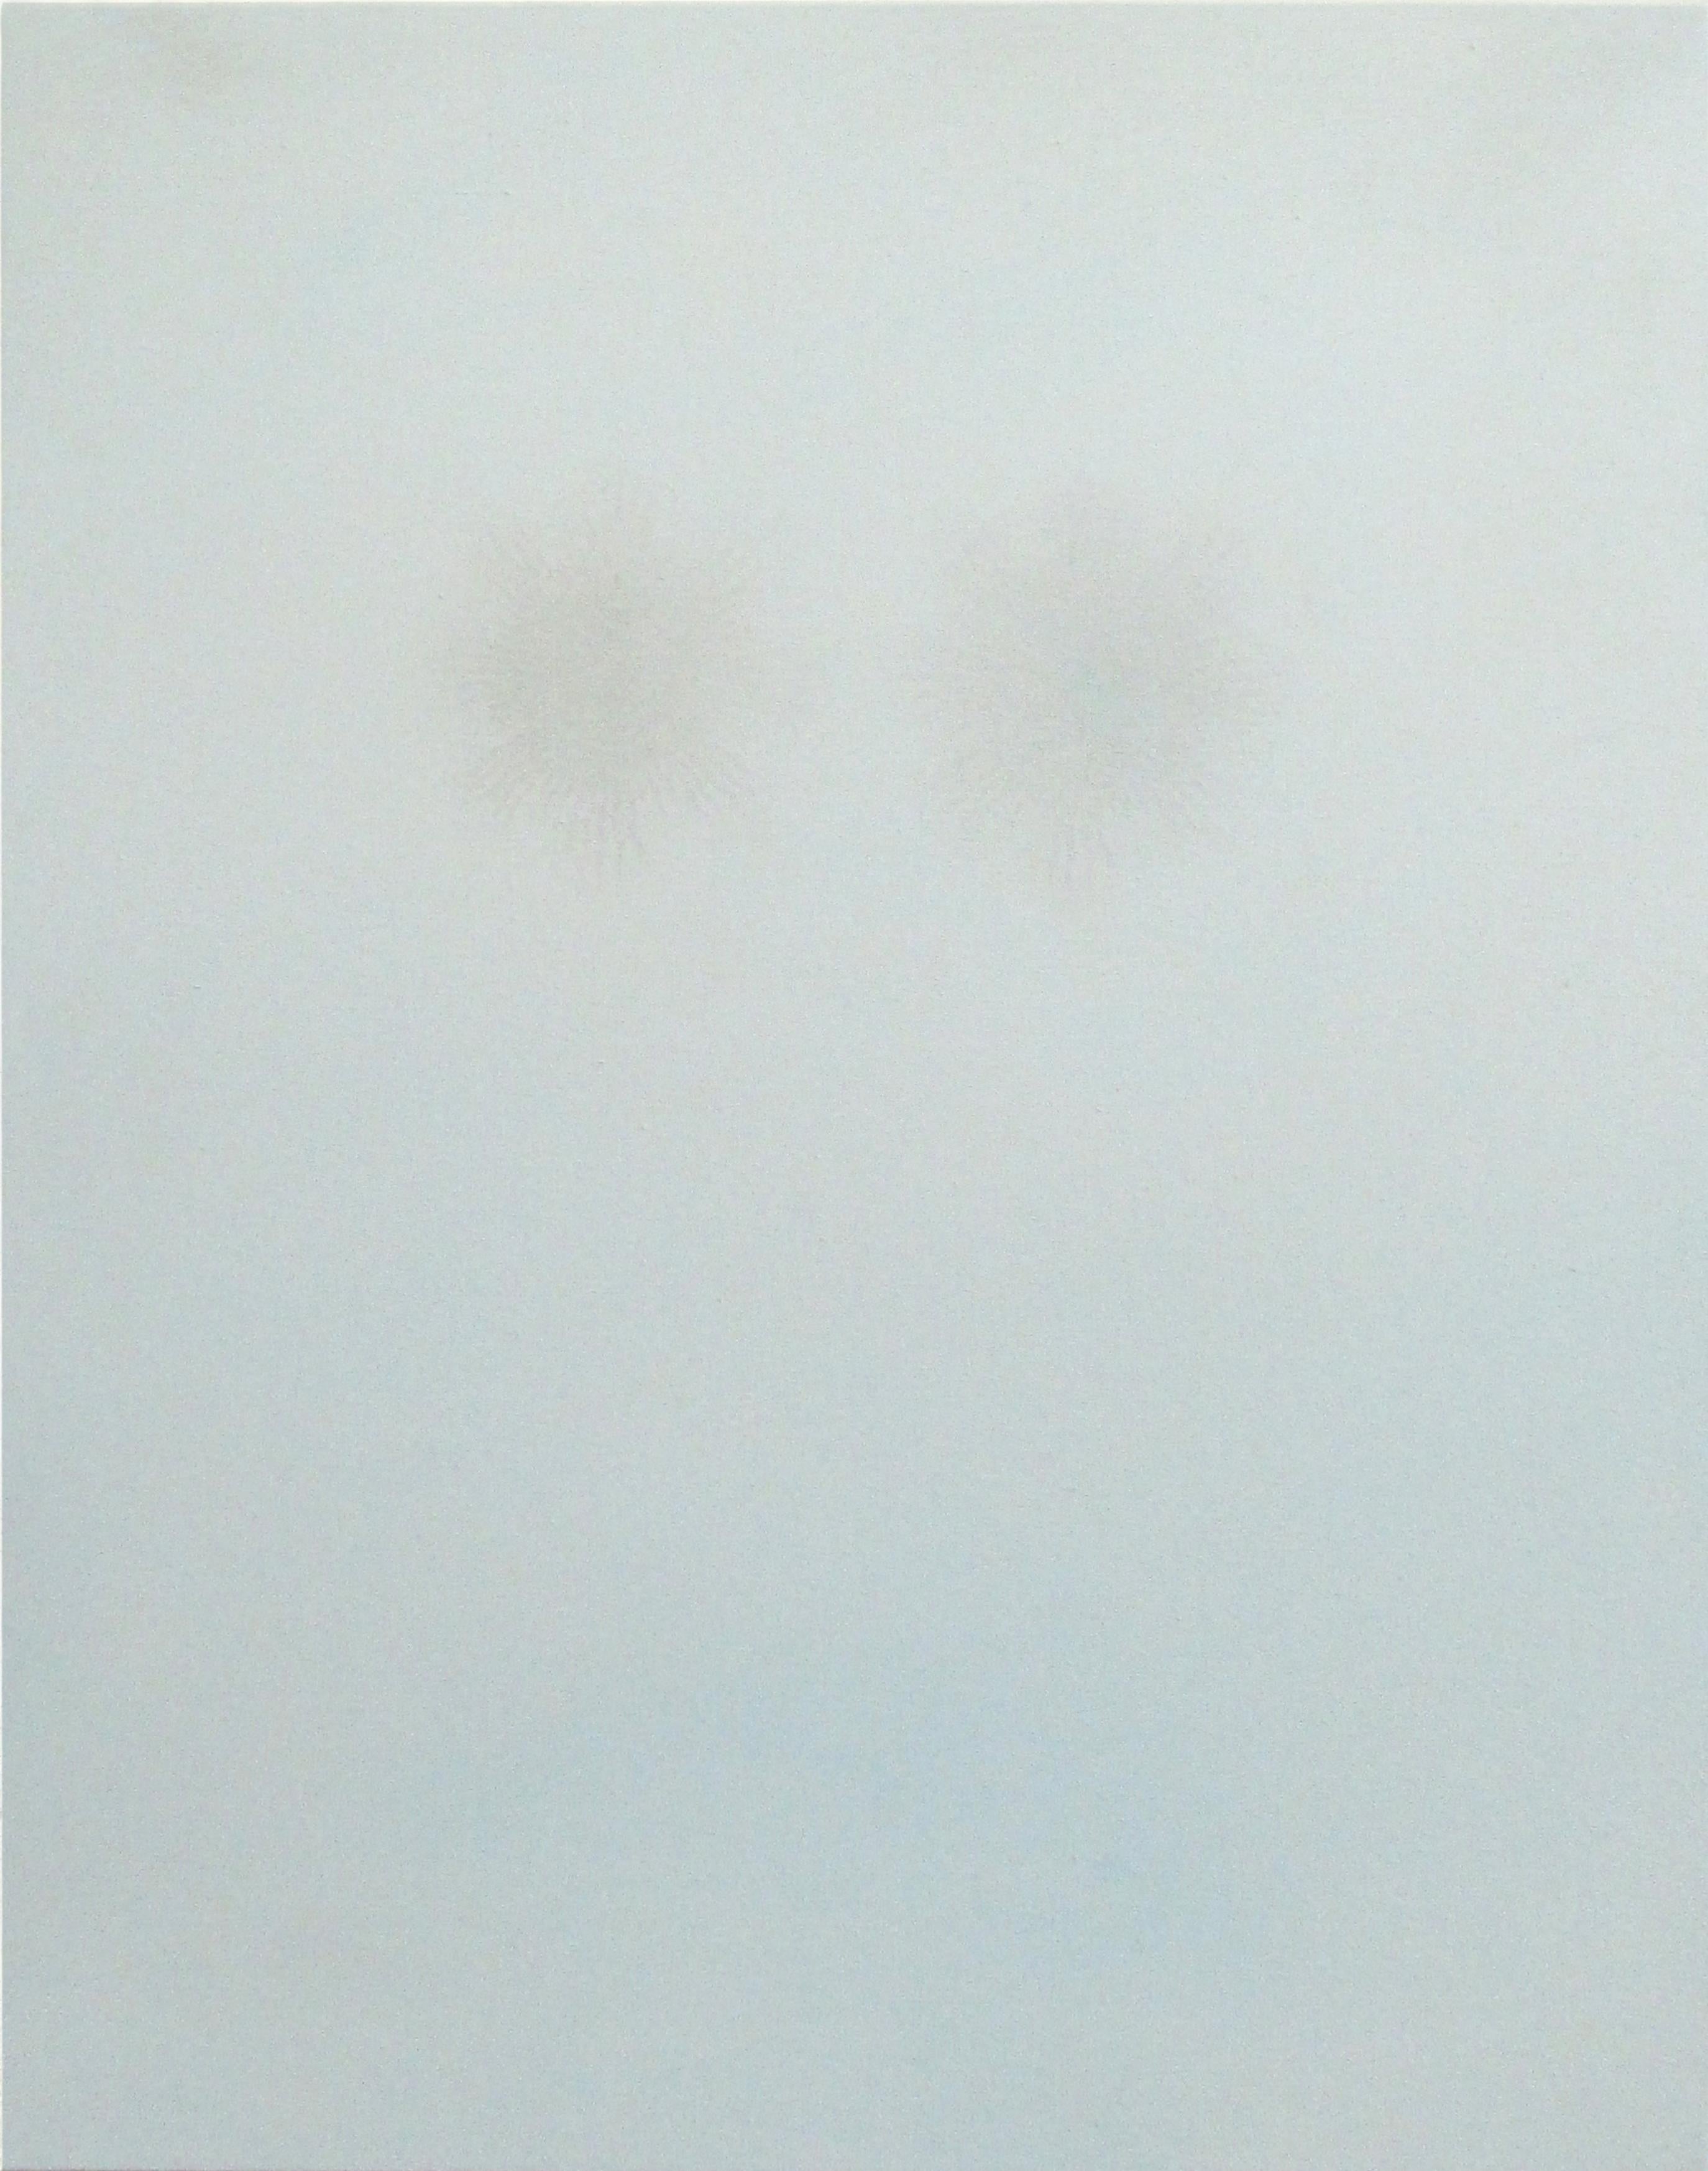 Ajay Kurian  Abstract Painting - Ghost Train 